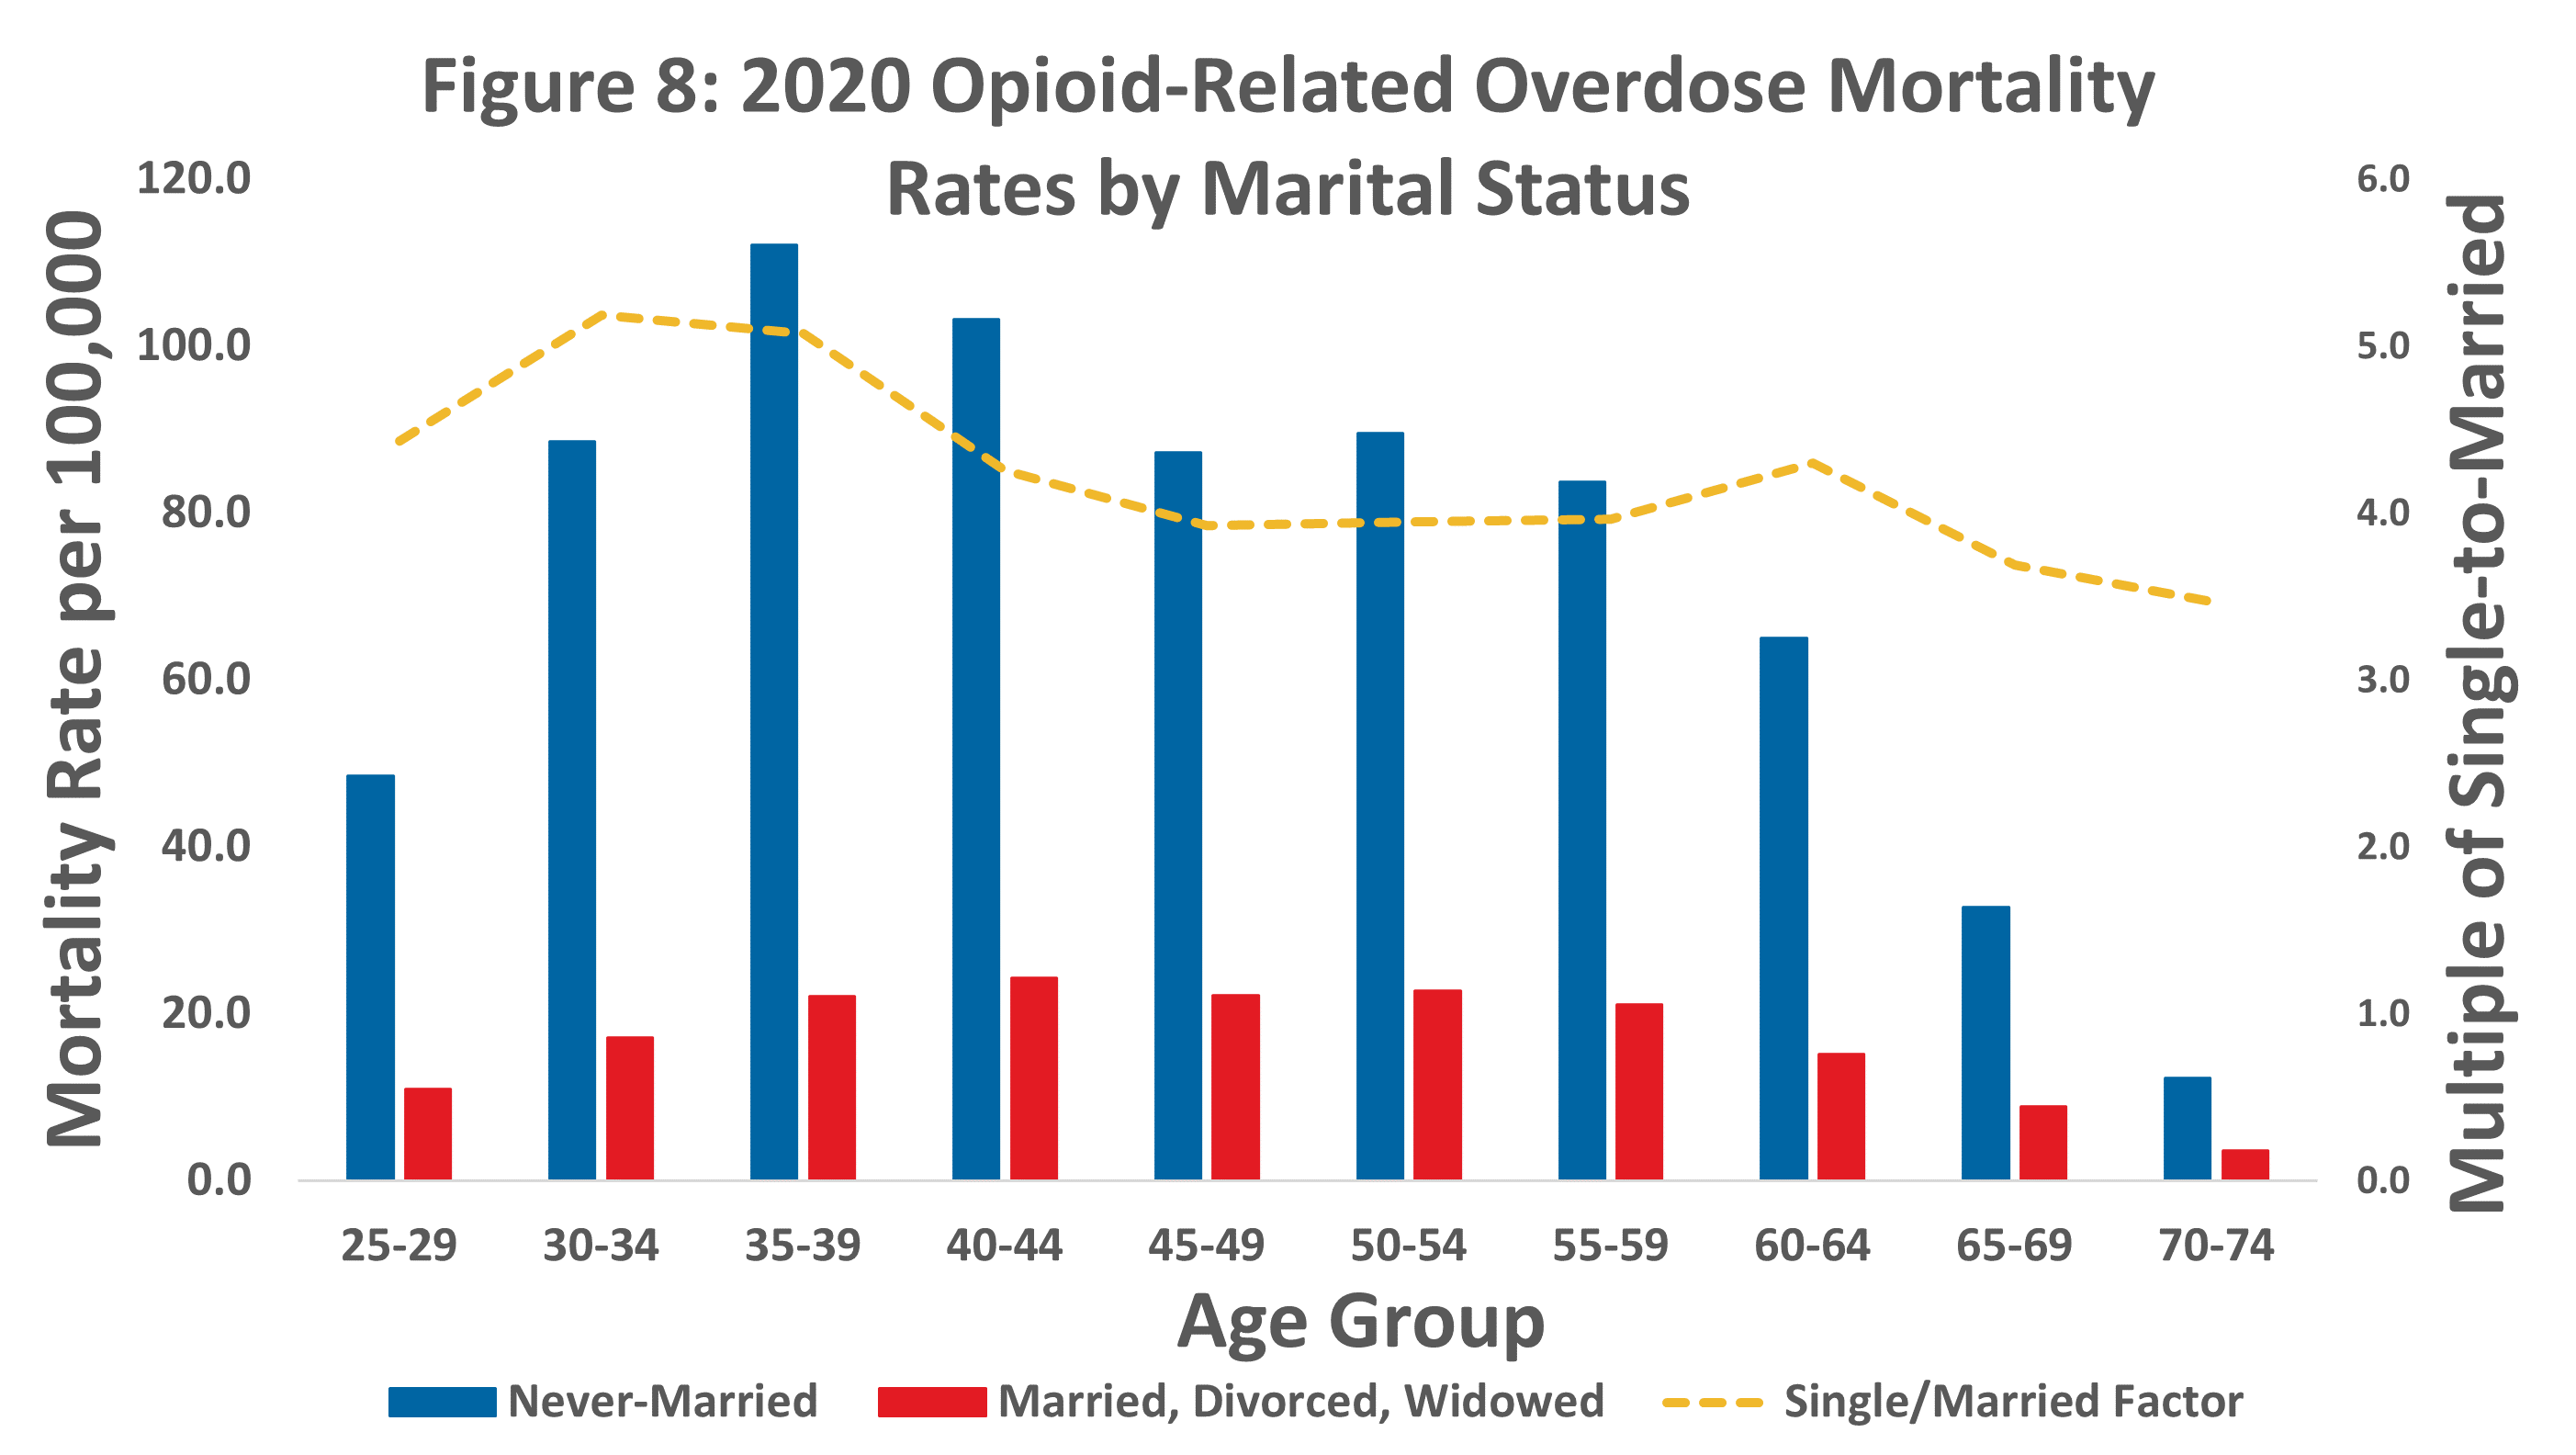 RGA_Opioid mortality 2020_Figure 8